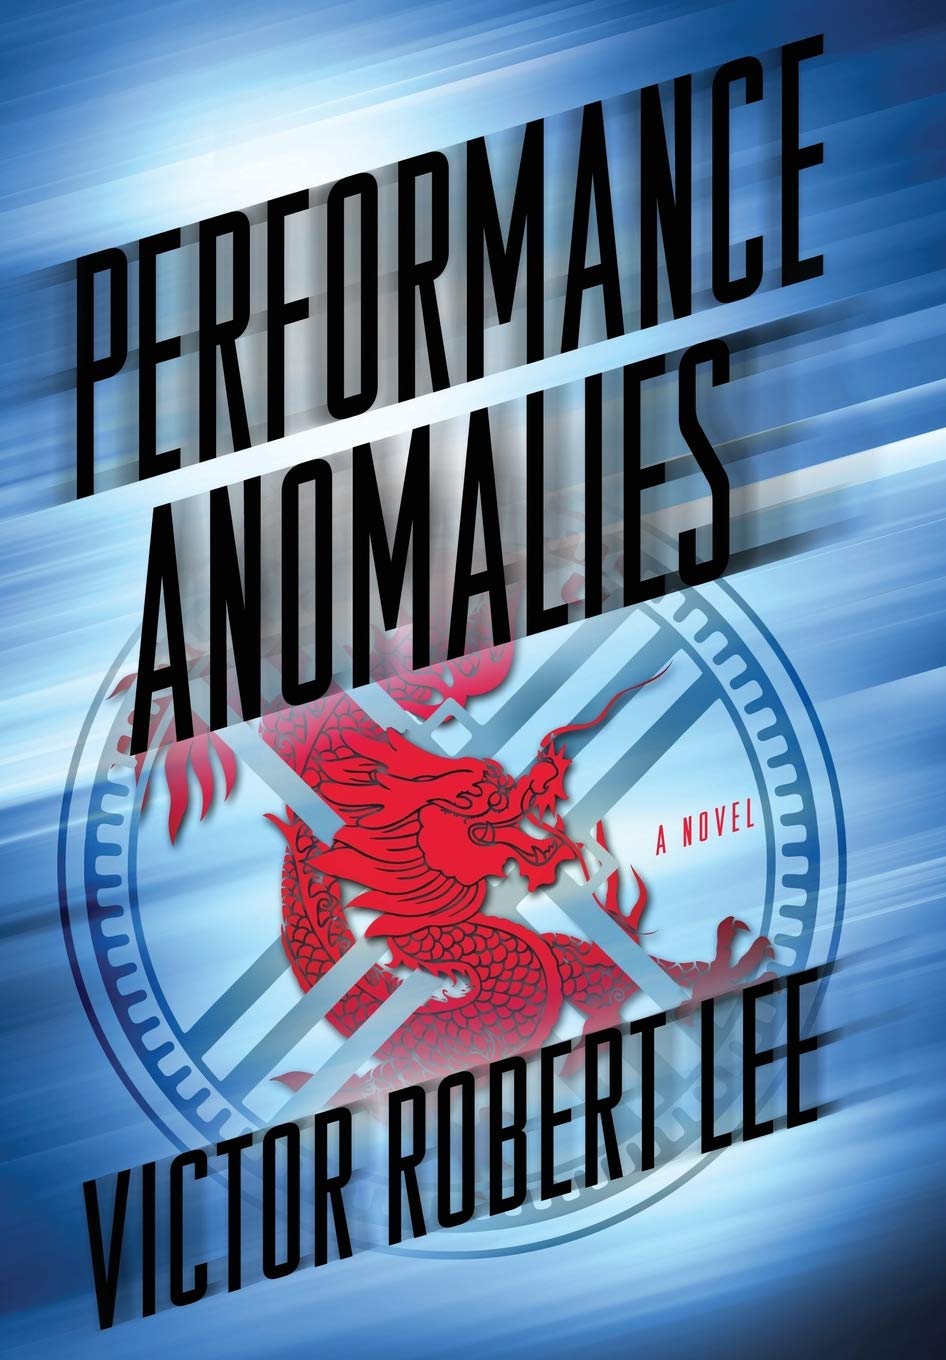 Performance Anomalies: A Novel